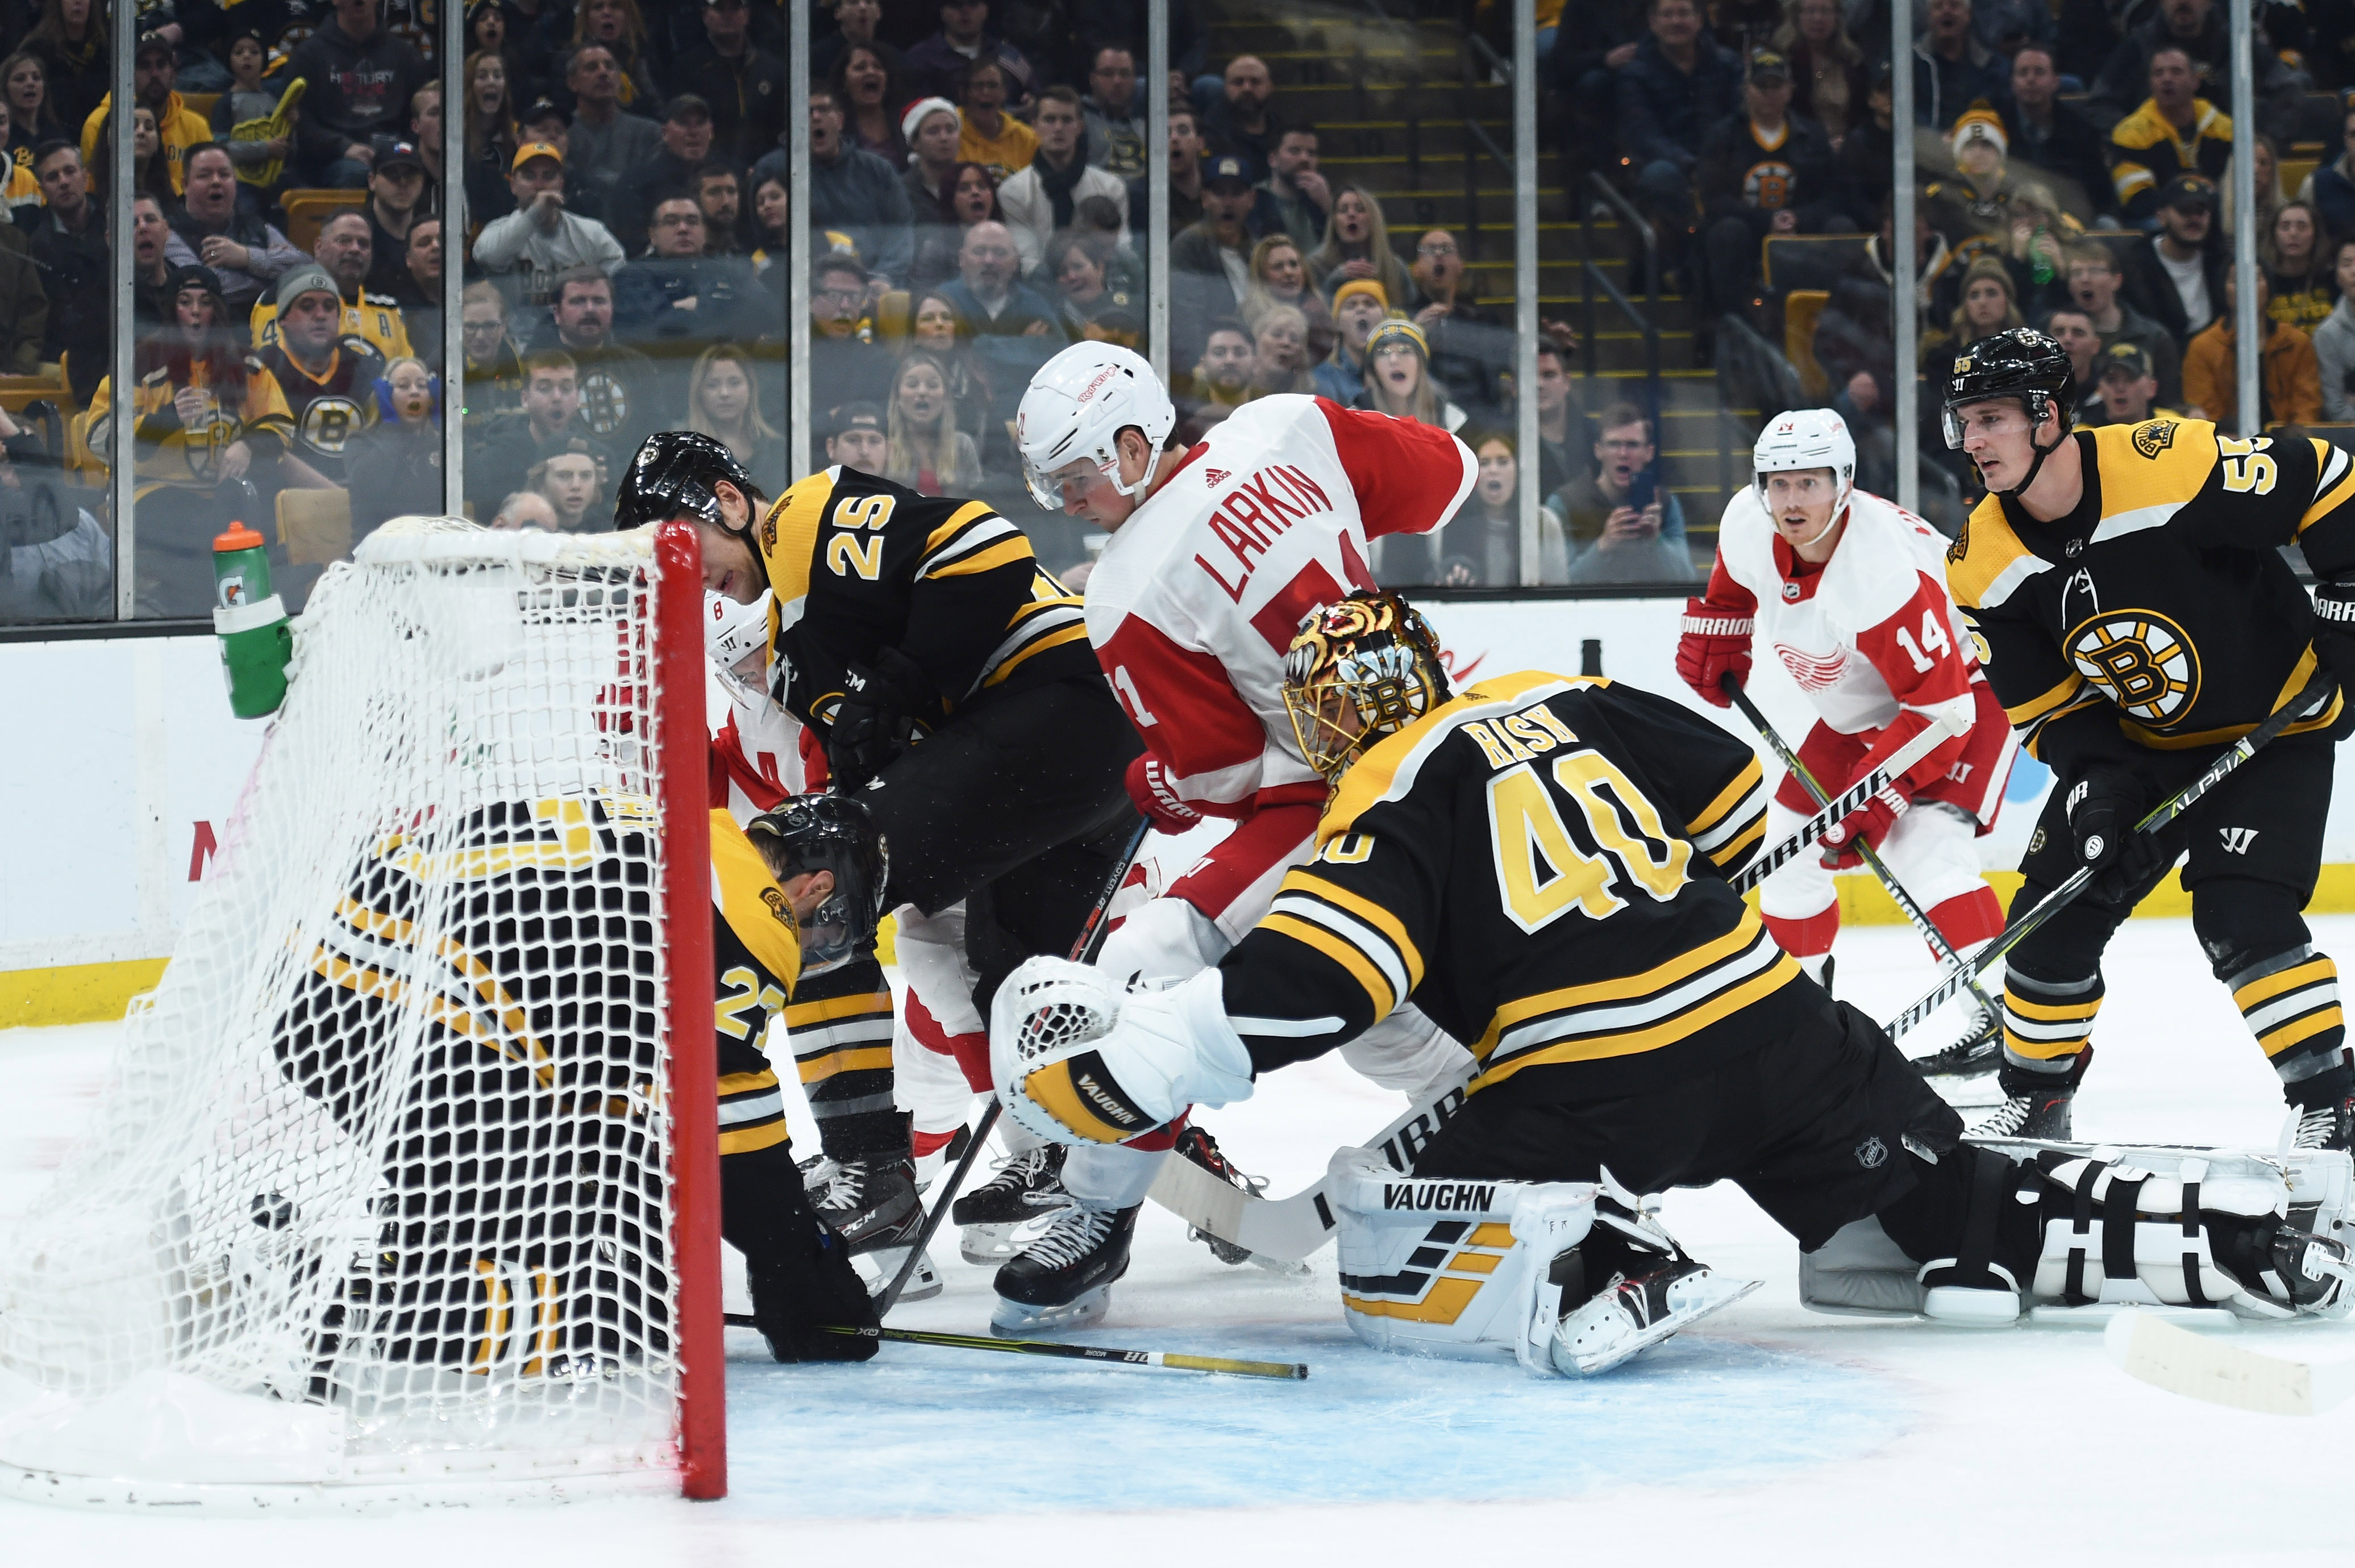 NHL: Detroit Red Wings at Boston Bruins